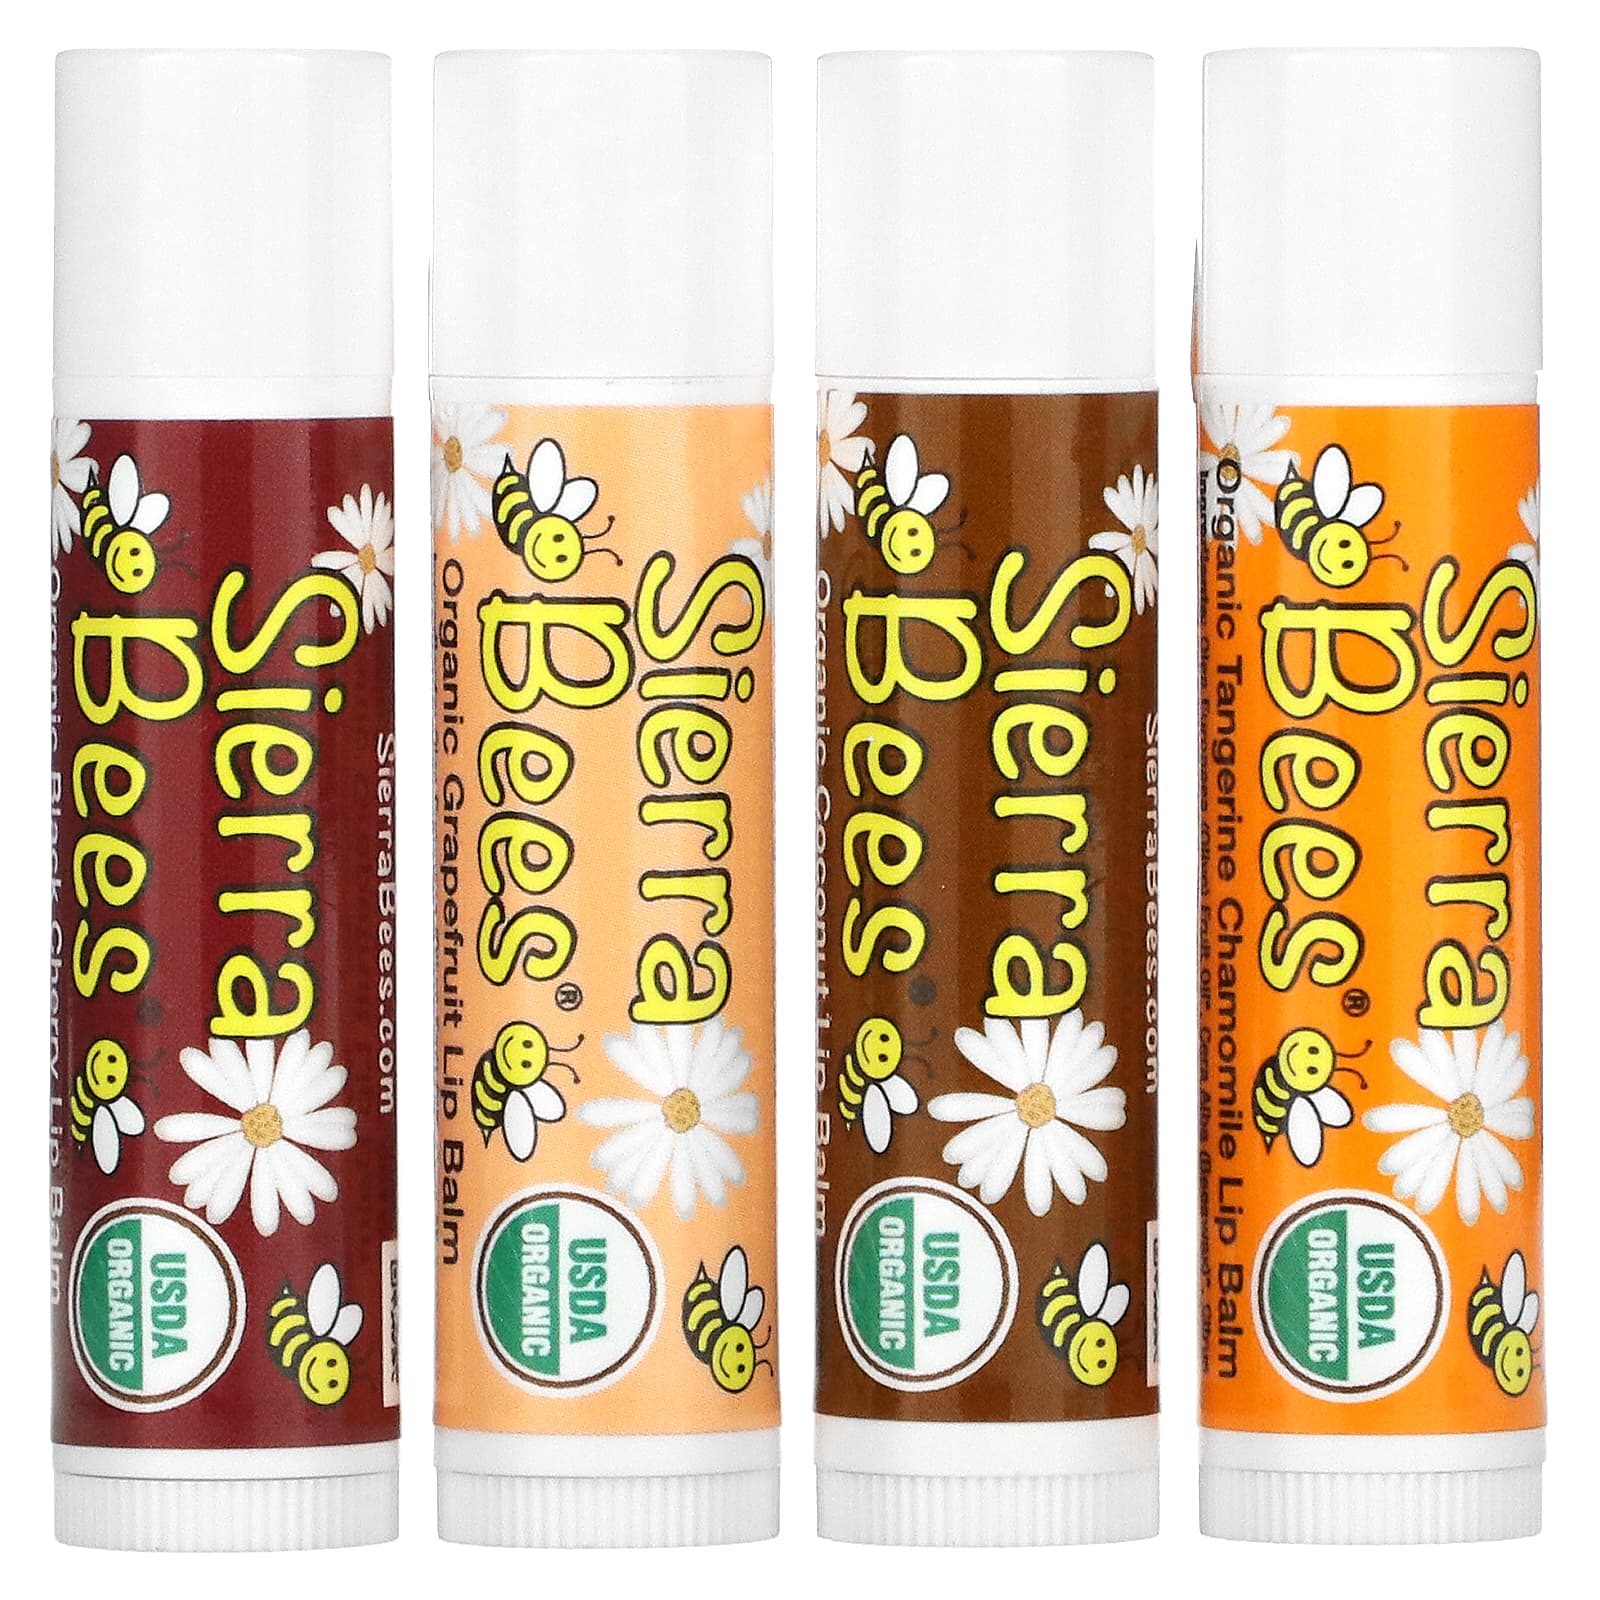 Sierra Bees, オーガニックリップクリームバリューパック、パック4種類、各4.25g